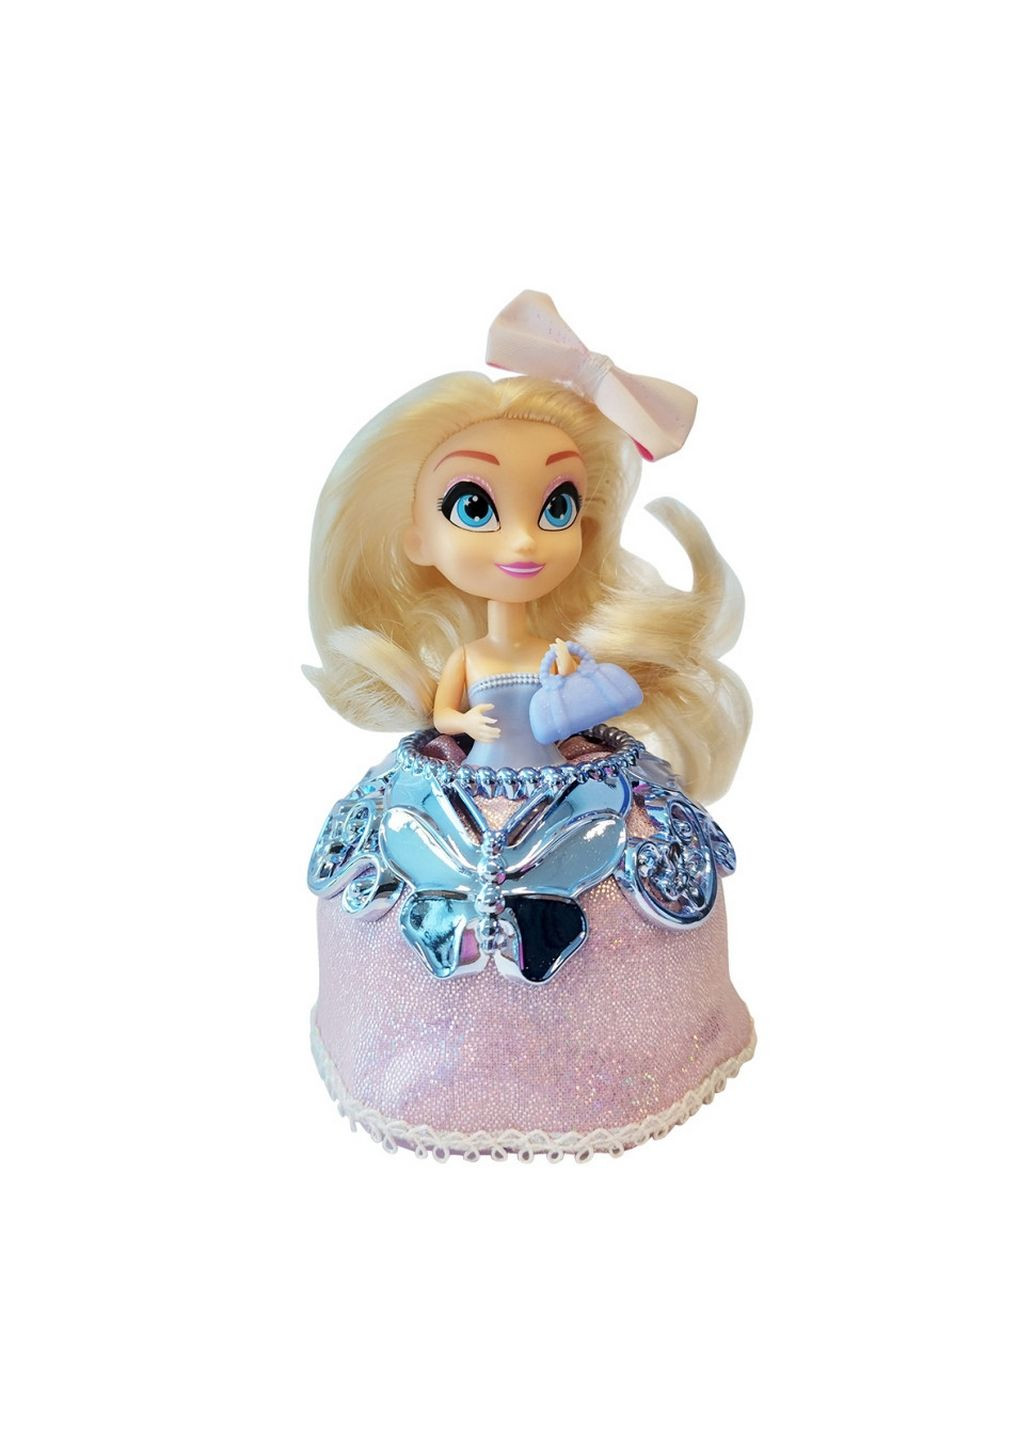 Детская кукла Роза Ли с аксессуарами Perfumies (288135146)